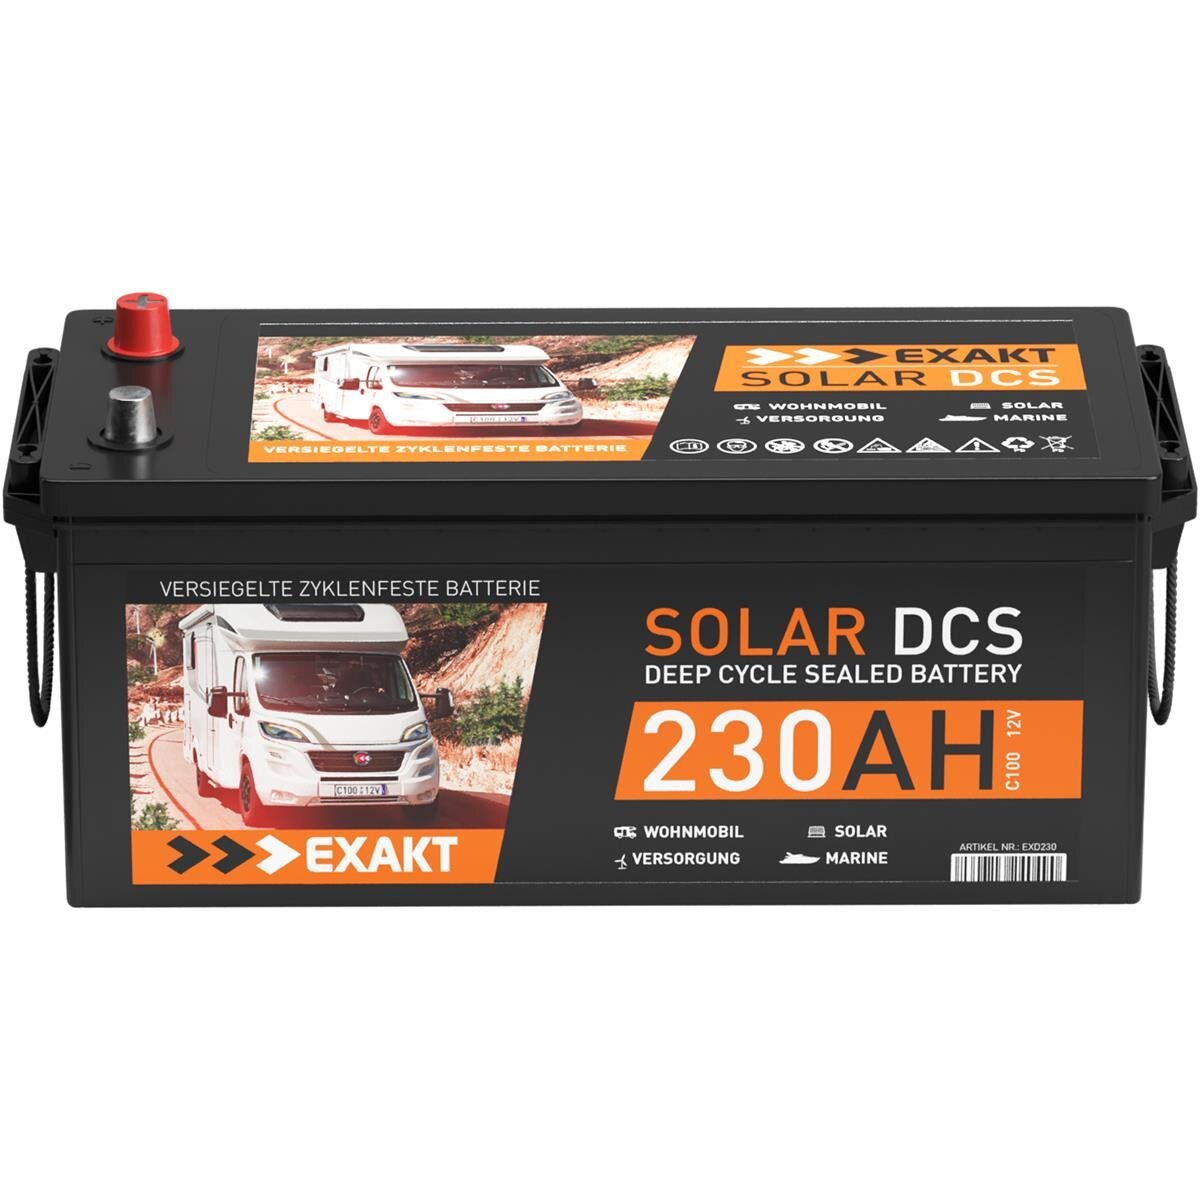 EXAKT Solar DCS Solarbatterie 230Ah 12V, 235,21 €